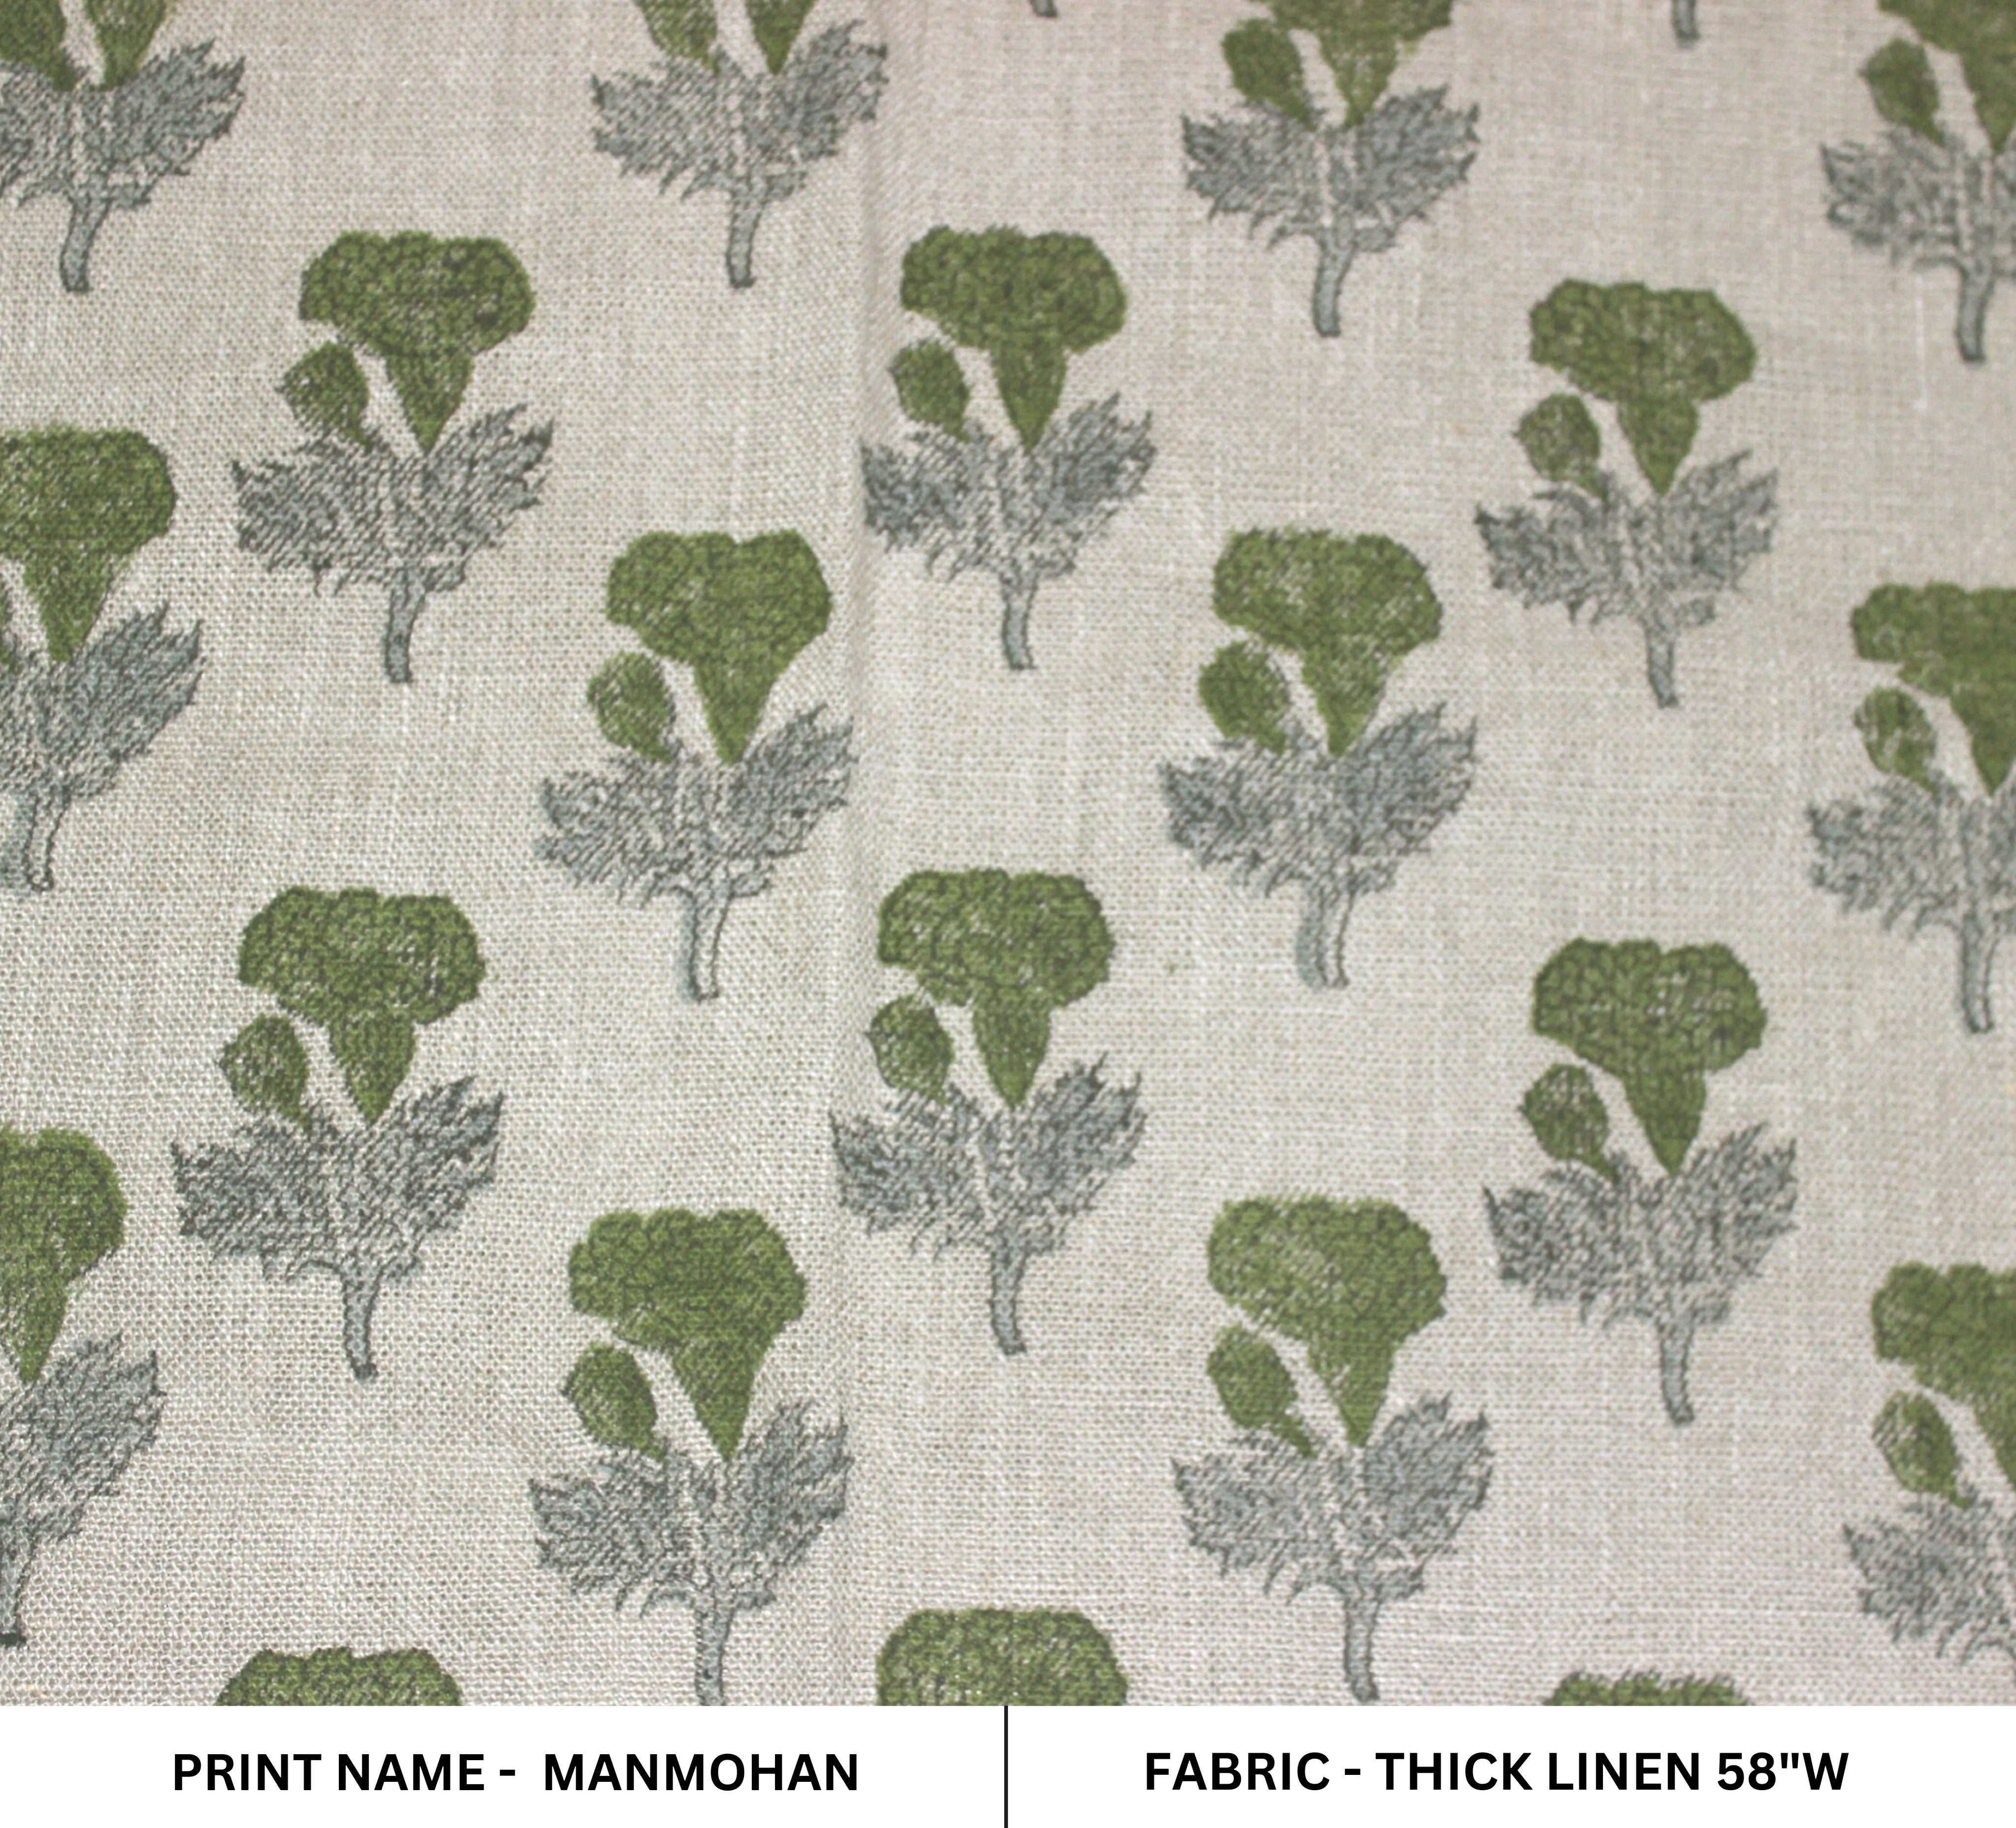 Block Print Linen Fabric, Manmohan  Pure Linen Fabric, Handmade Indian Block Print Fabric, Linen Running Fabric, Heavy Weight Handloom Fabric, Natural Linen By Yard